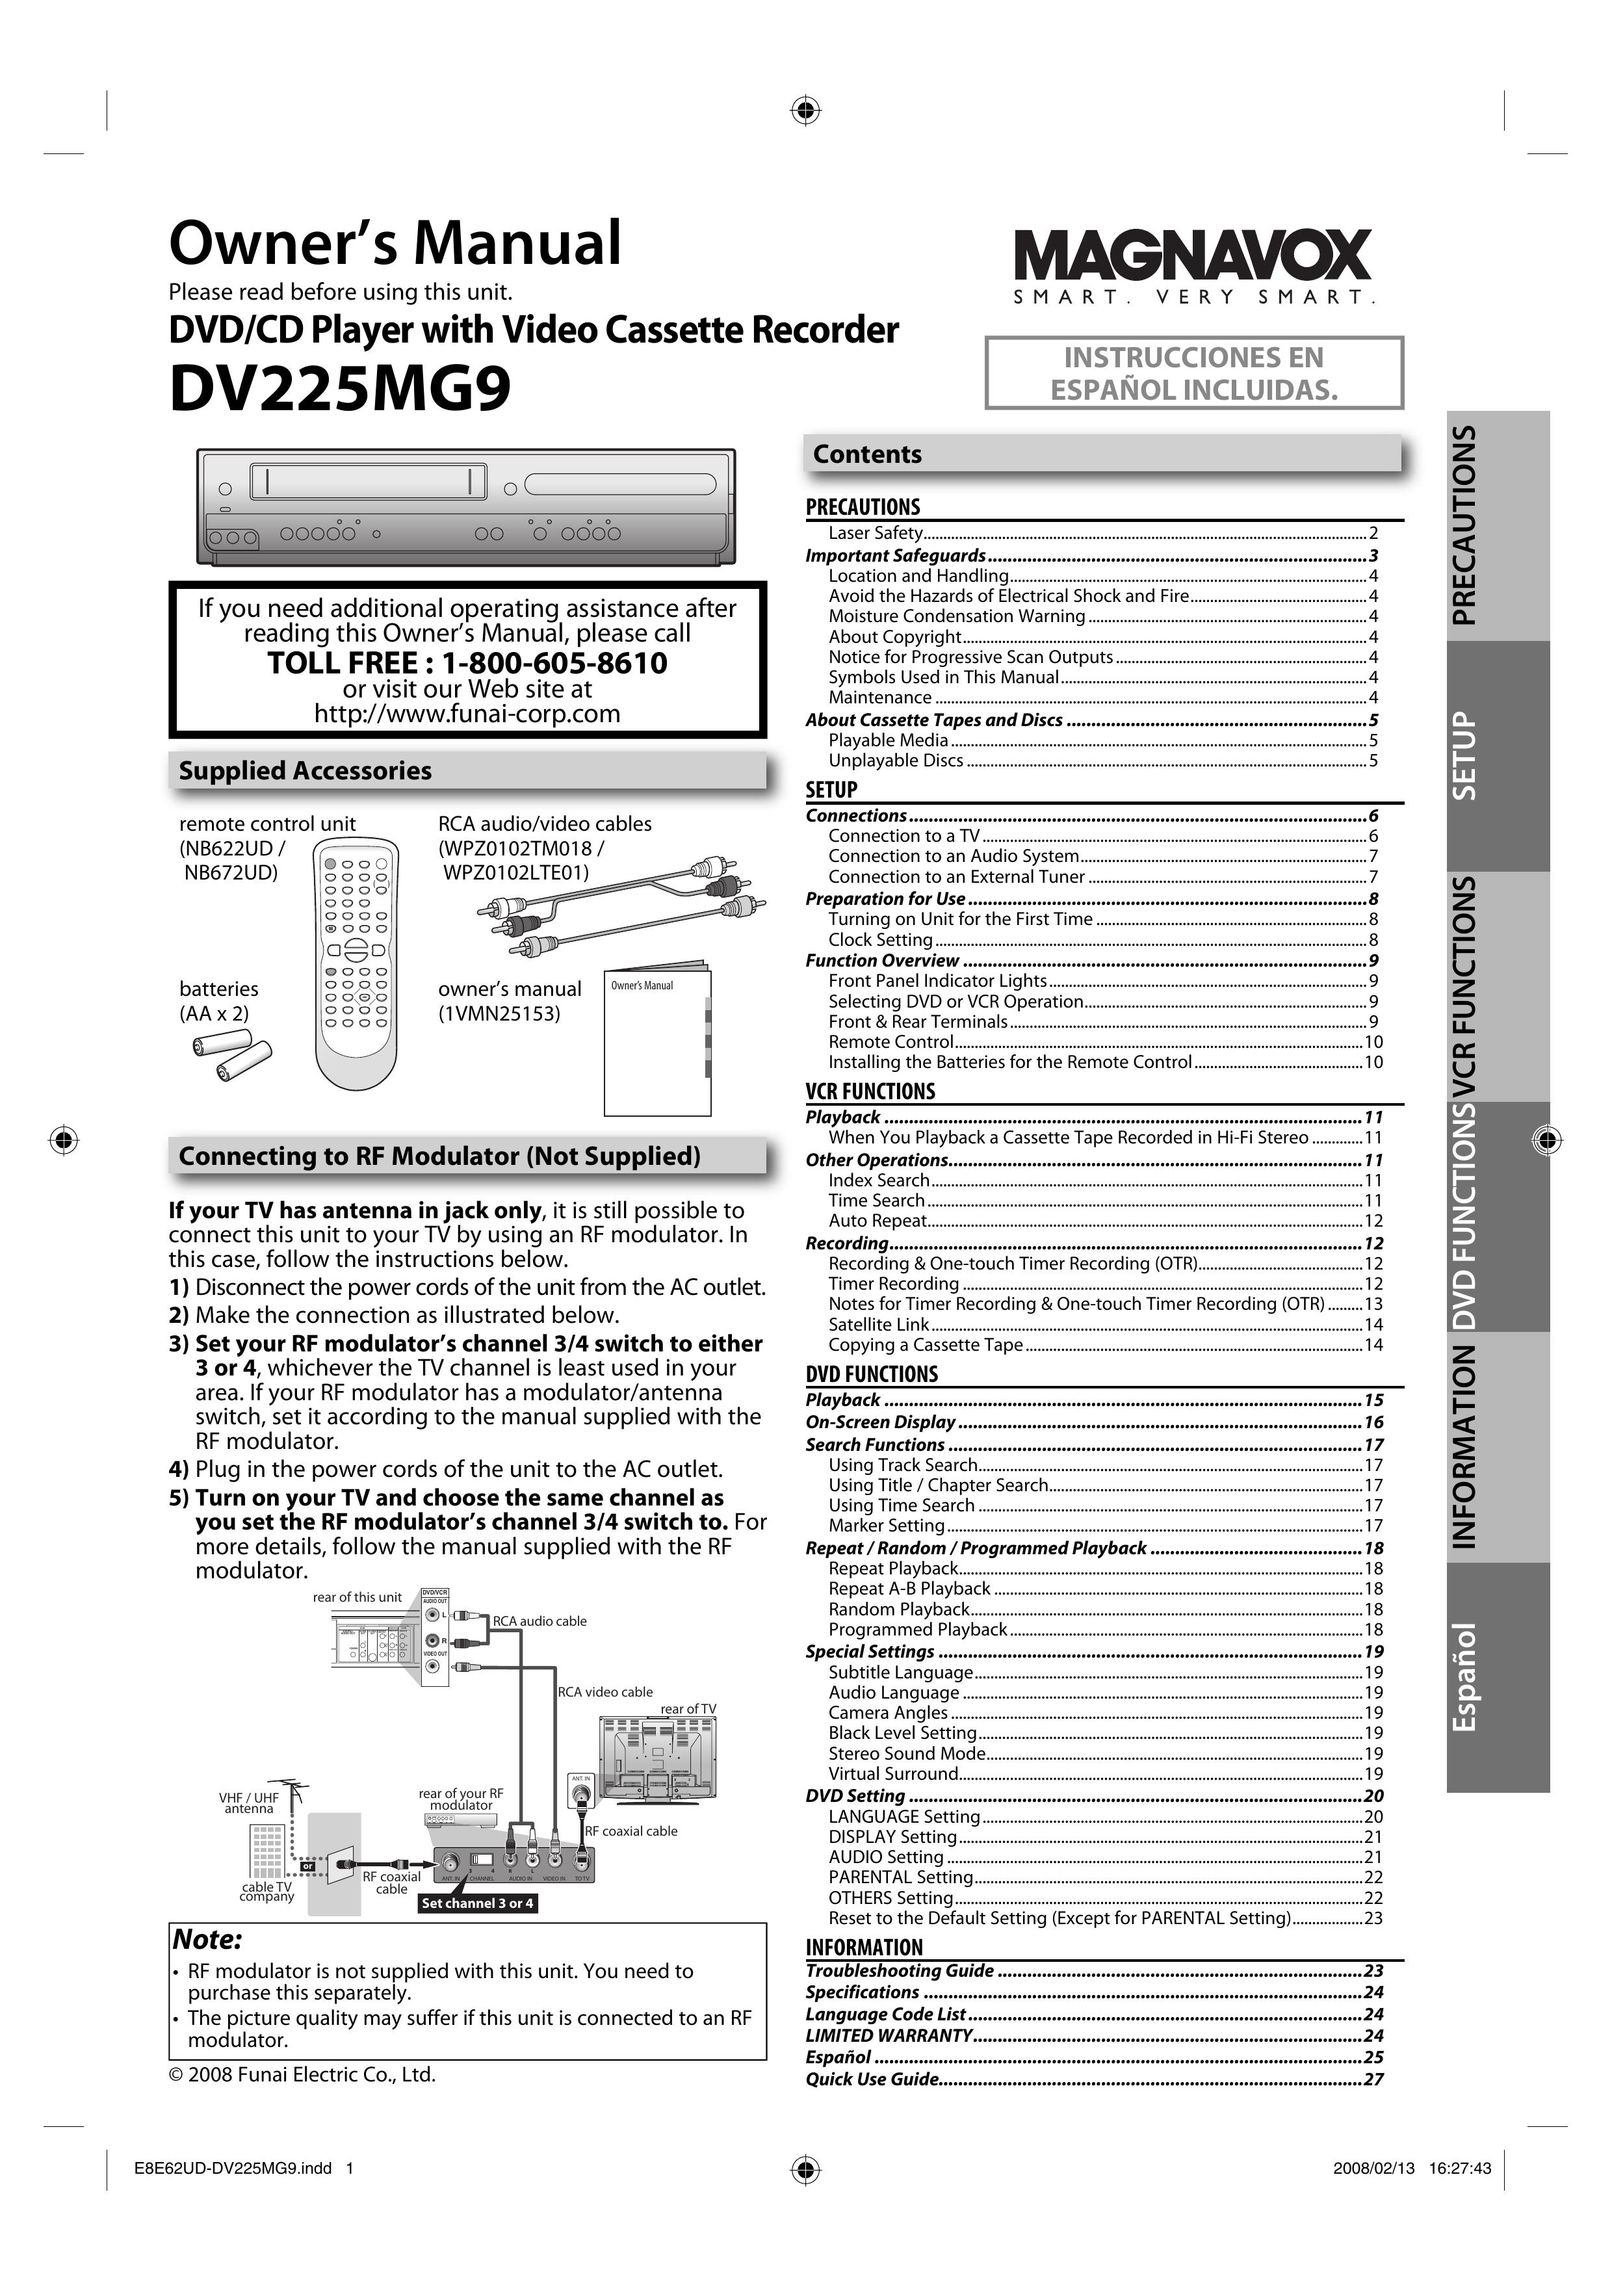 Magnavox DV225MG9 VCR User Manual